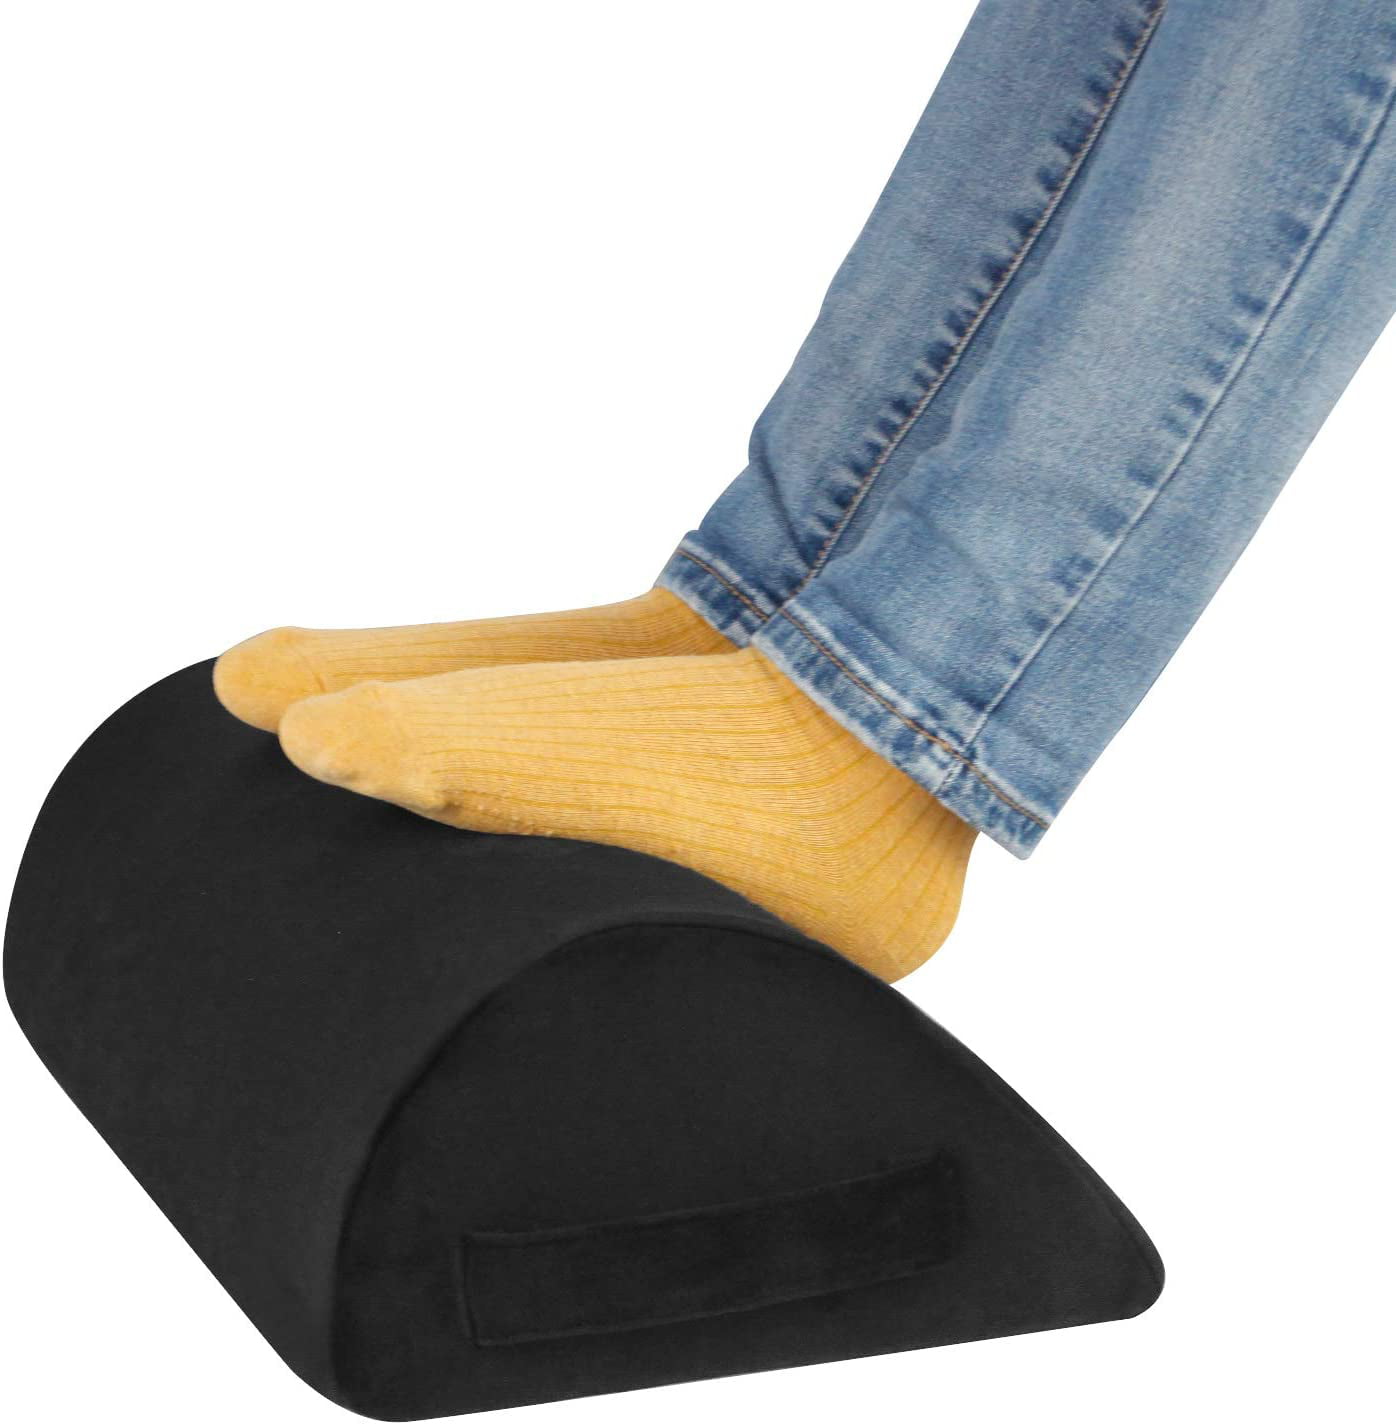 Lomubue Foot Rest Anti-slip Comfortable Zipper Double Layer